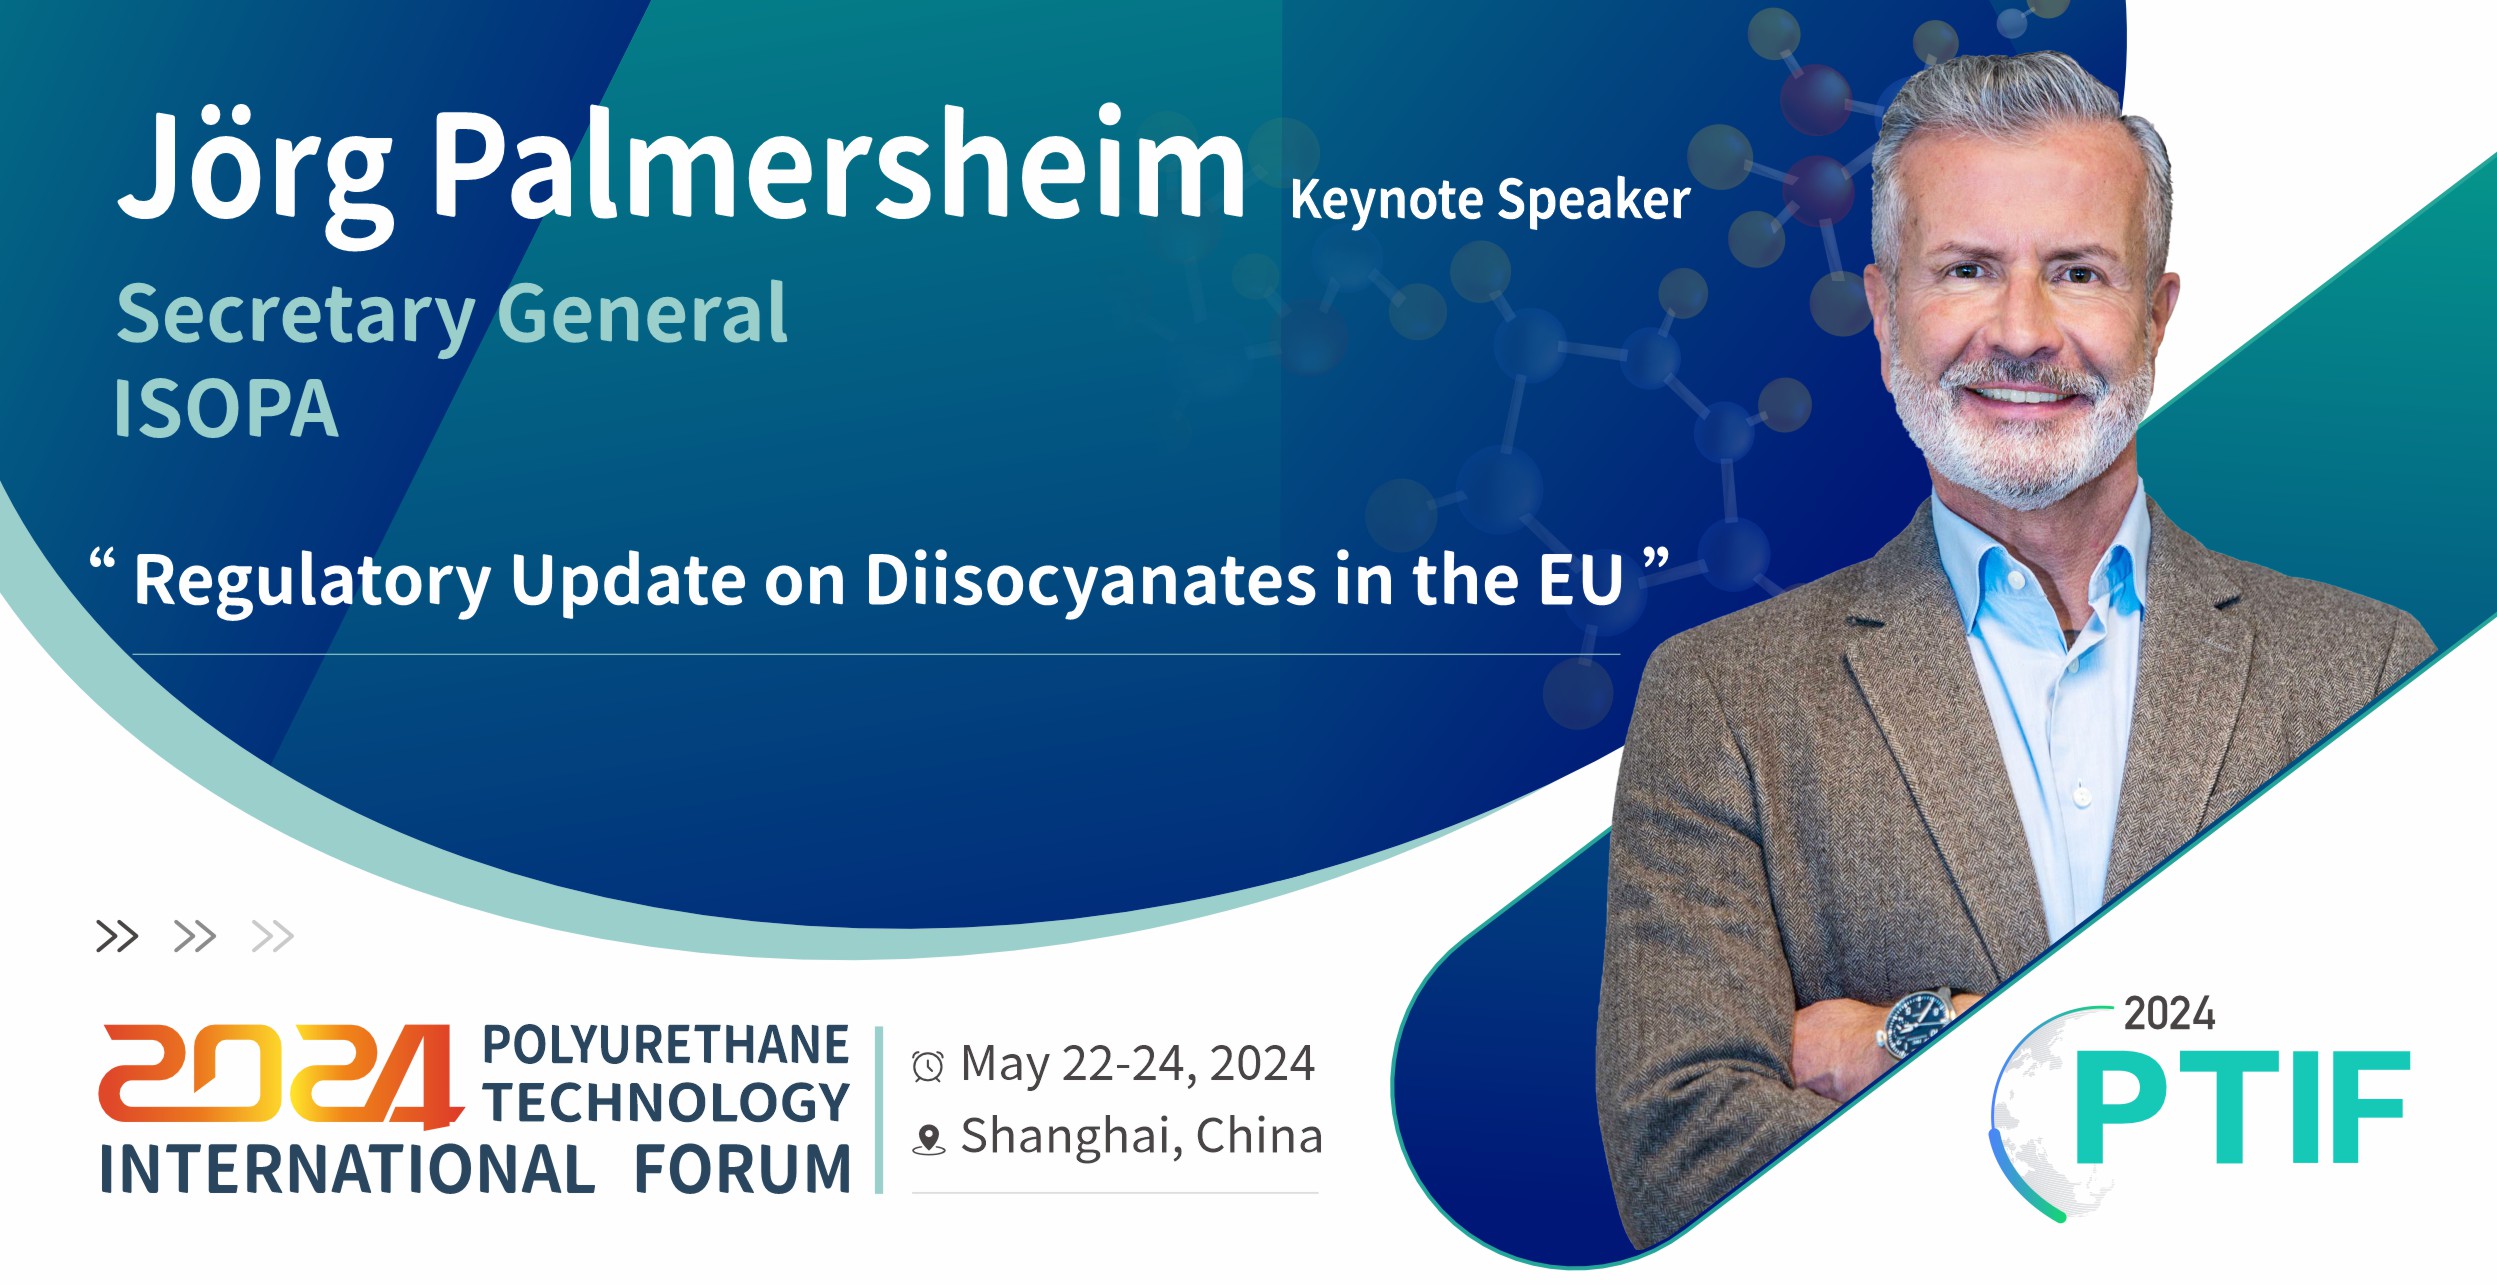 Polyurethane Tech International Forum 2024 to Welcome Keynote Speaker Jorg Palmersheim